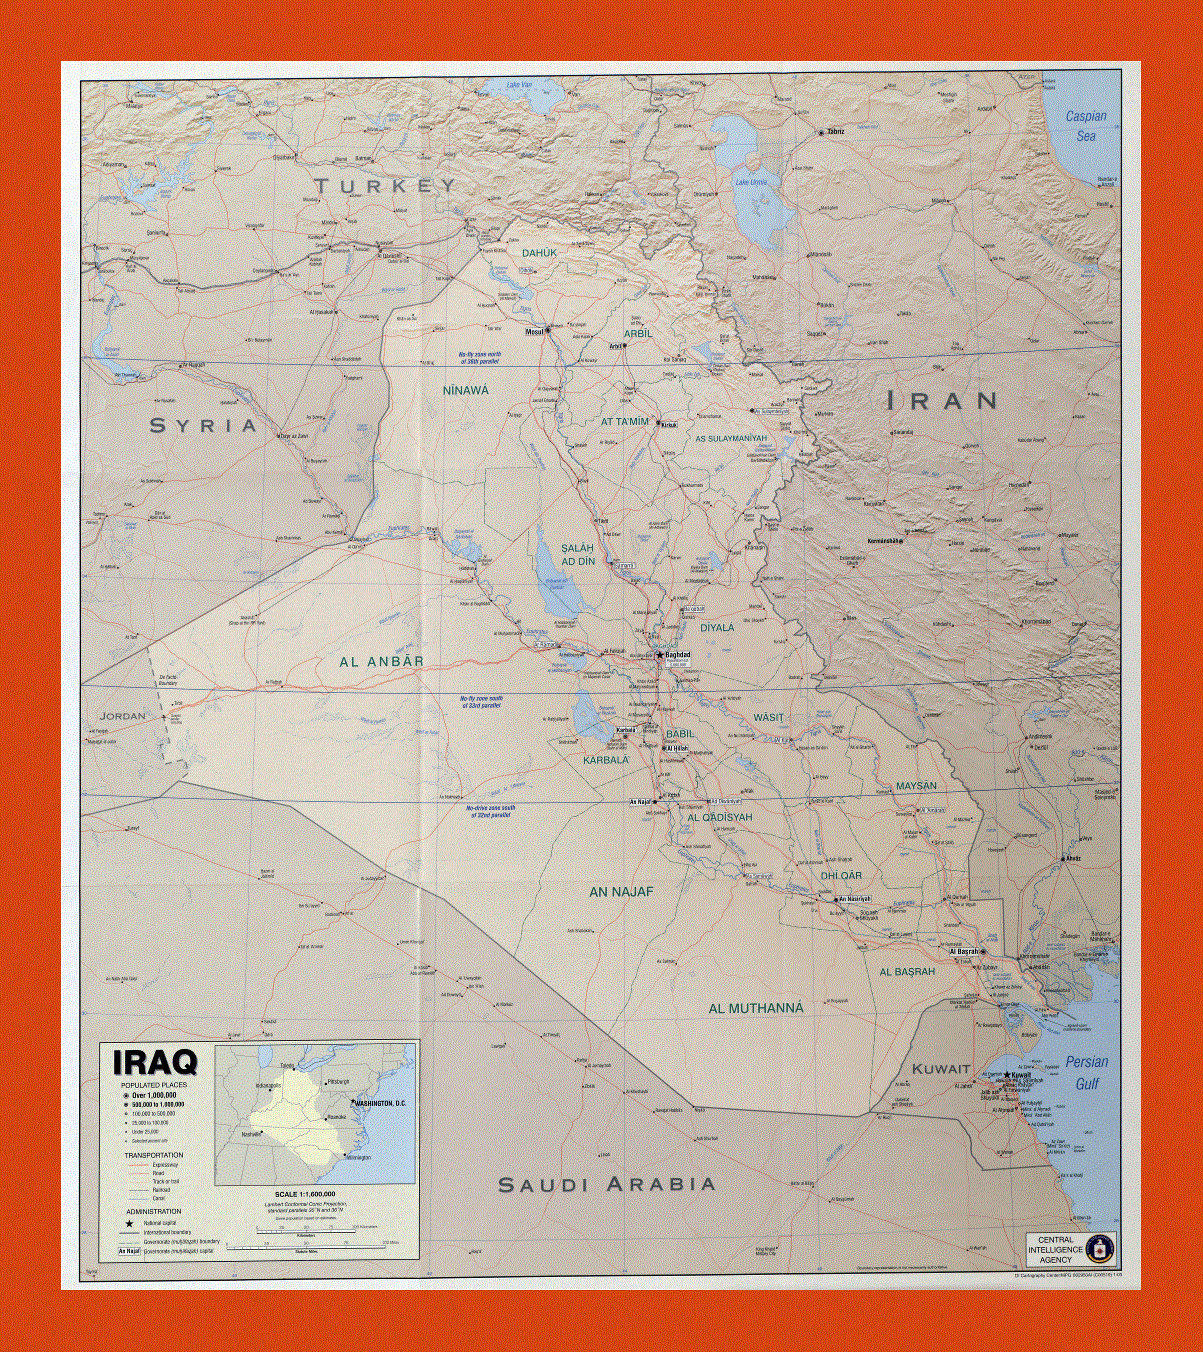 Political map of Iraq - 2003